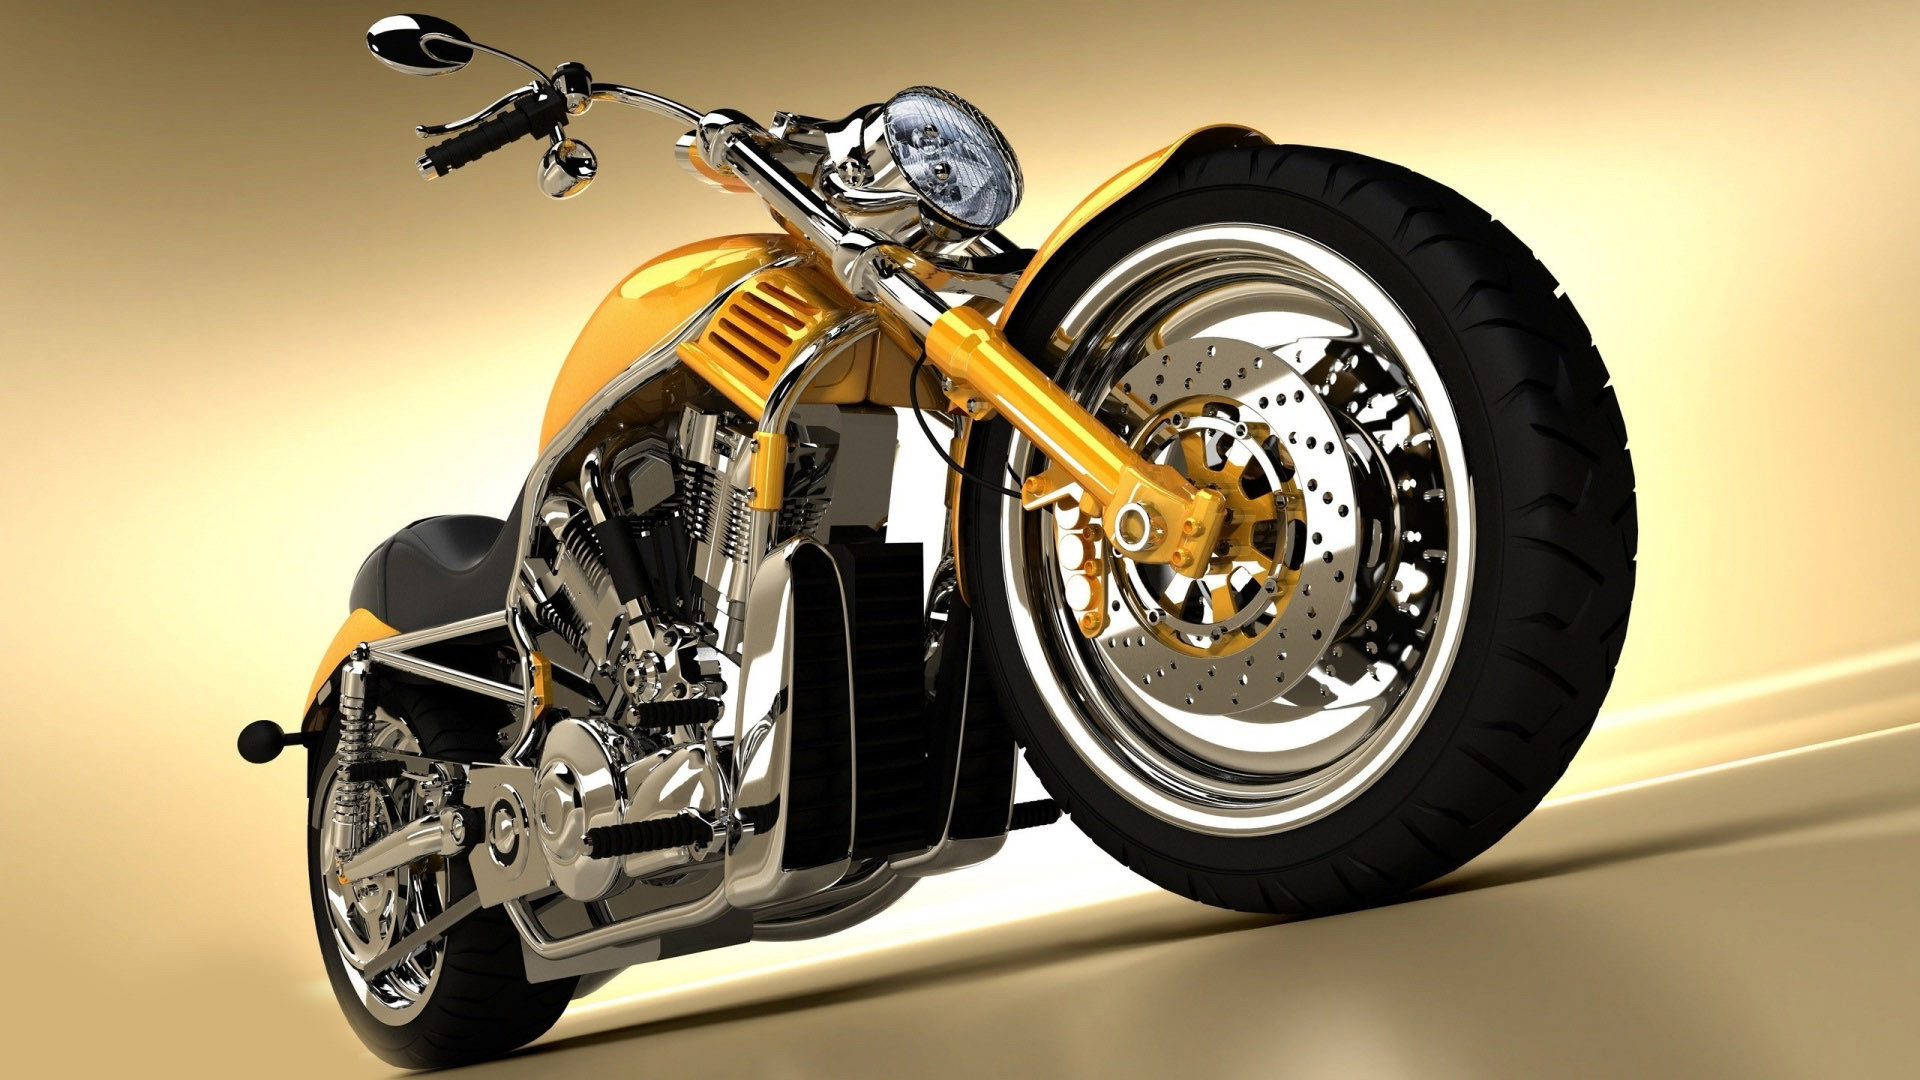 1920x1080 Harley Davidson Bikes HD Wallpaper , Images All Motorcycles Models Harley  Davidson Bikes Wallpapers Wallpapers)